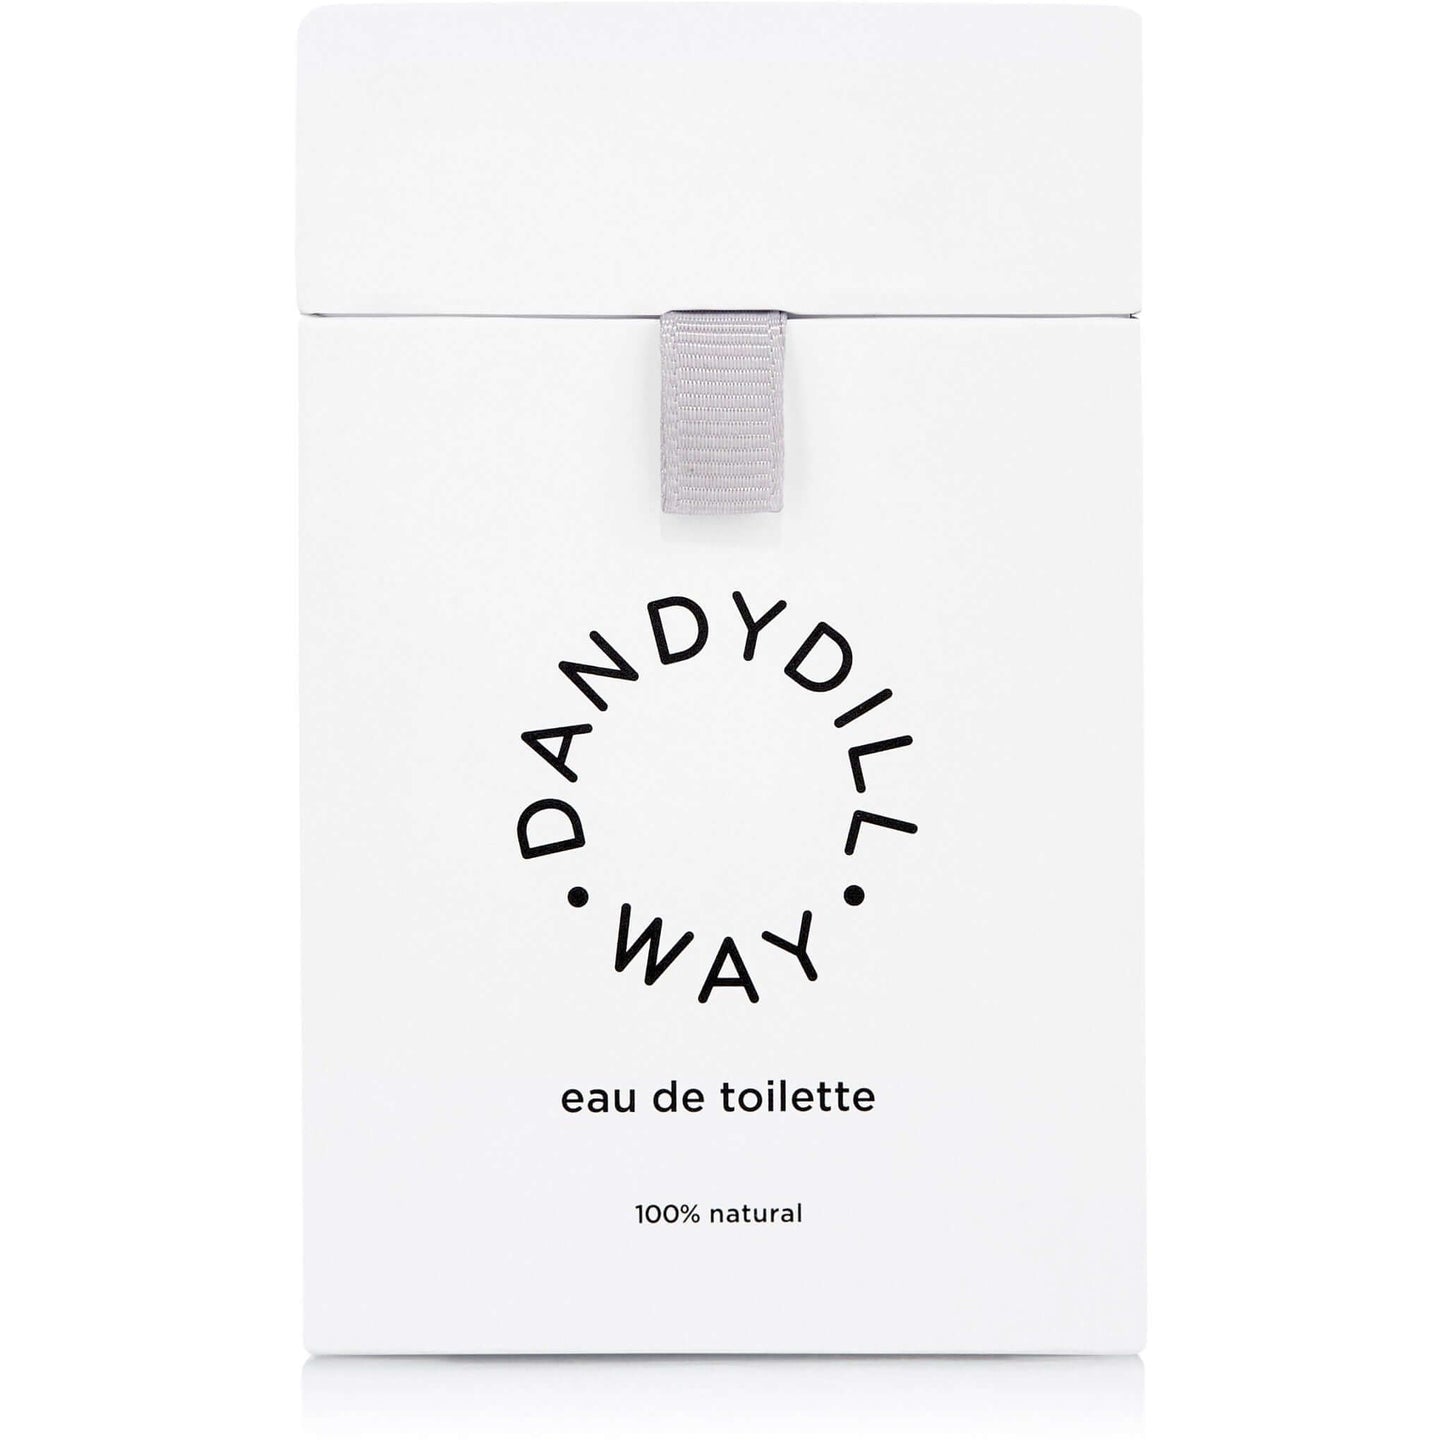 Organic, natural perfume ribbon gift box for organic perfume, Signature Eau de Toilette by Dandydill Way